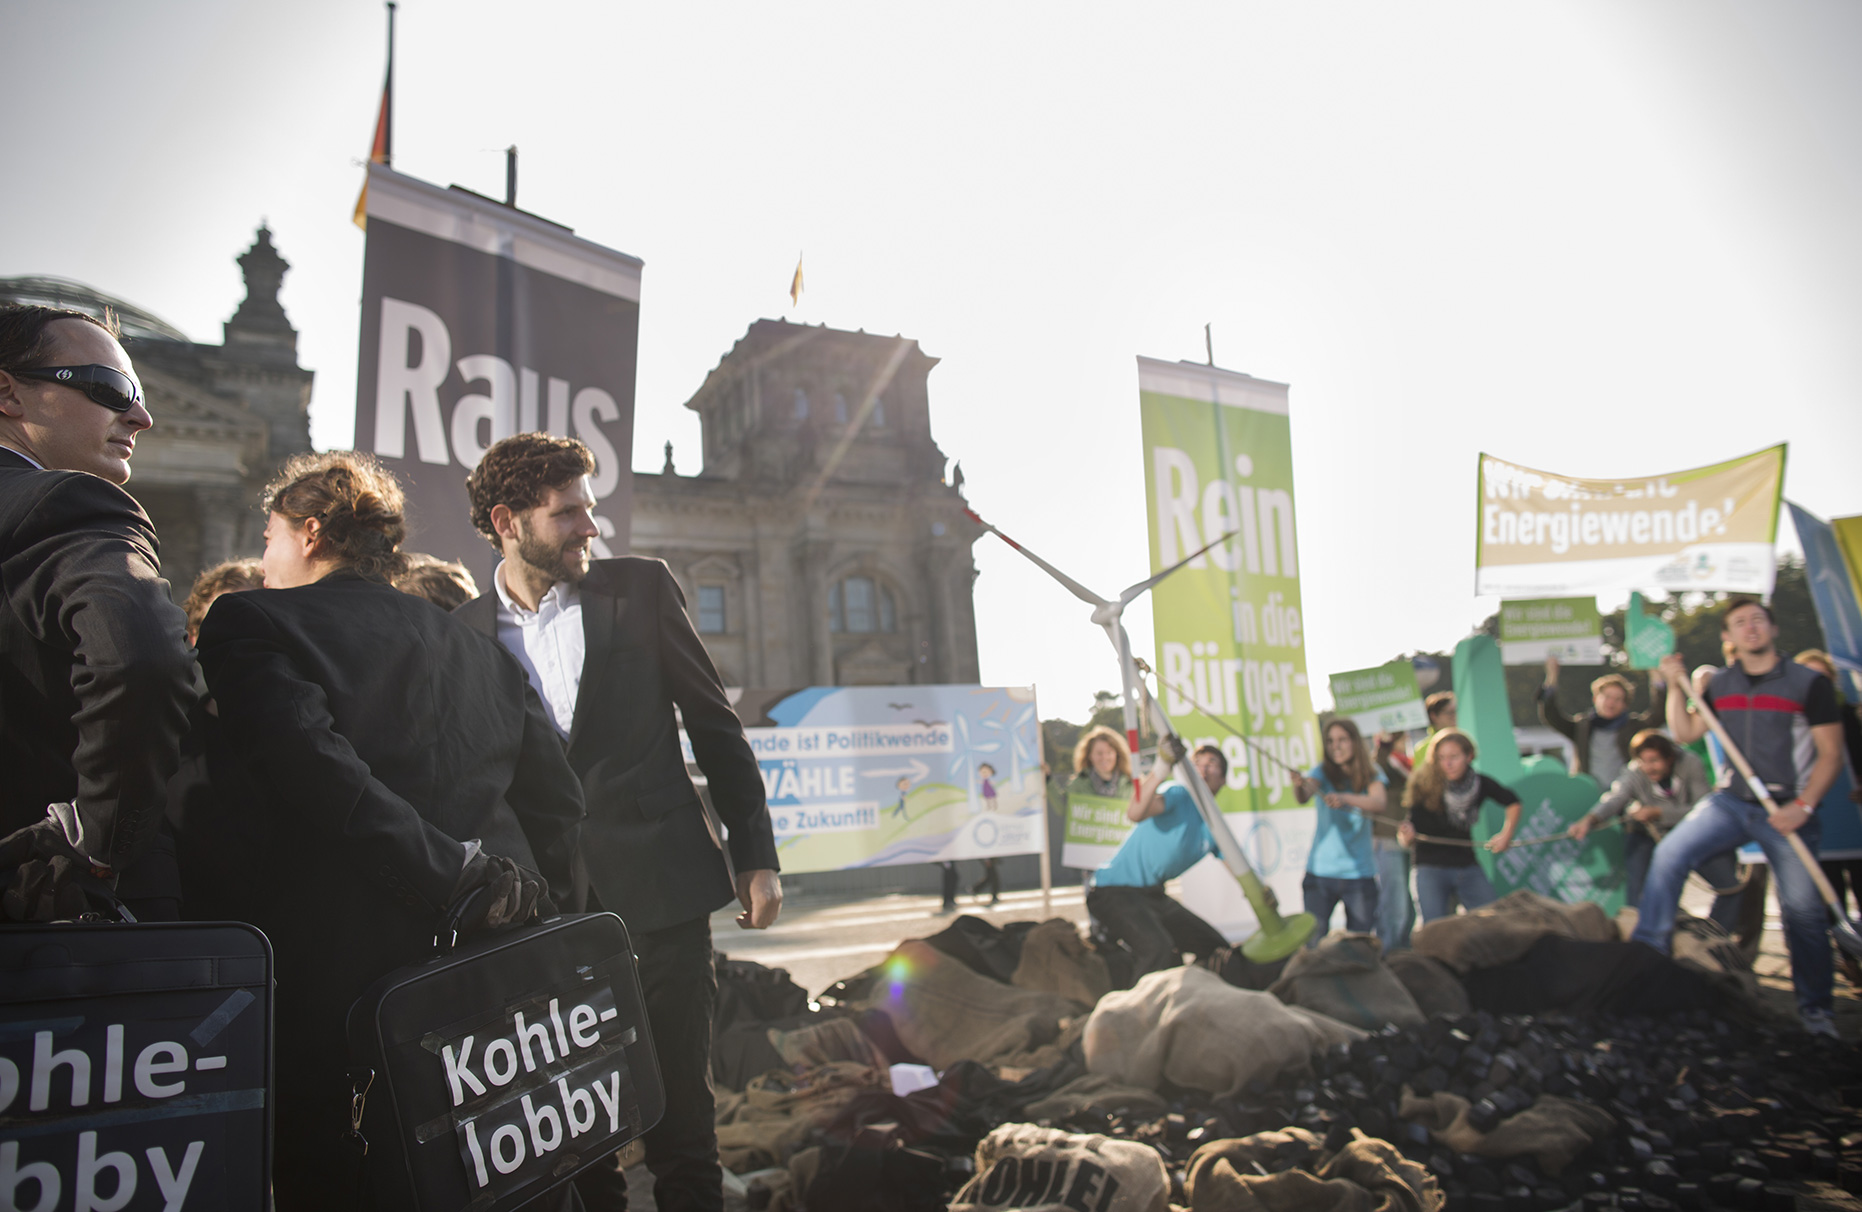 © Dirk Mathesius, Avaaz.org politican performance at Reichstag, Berlin